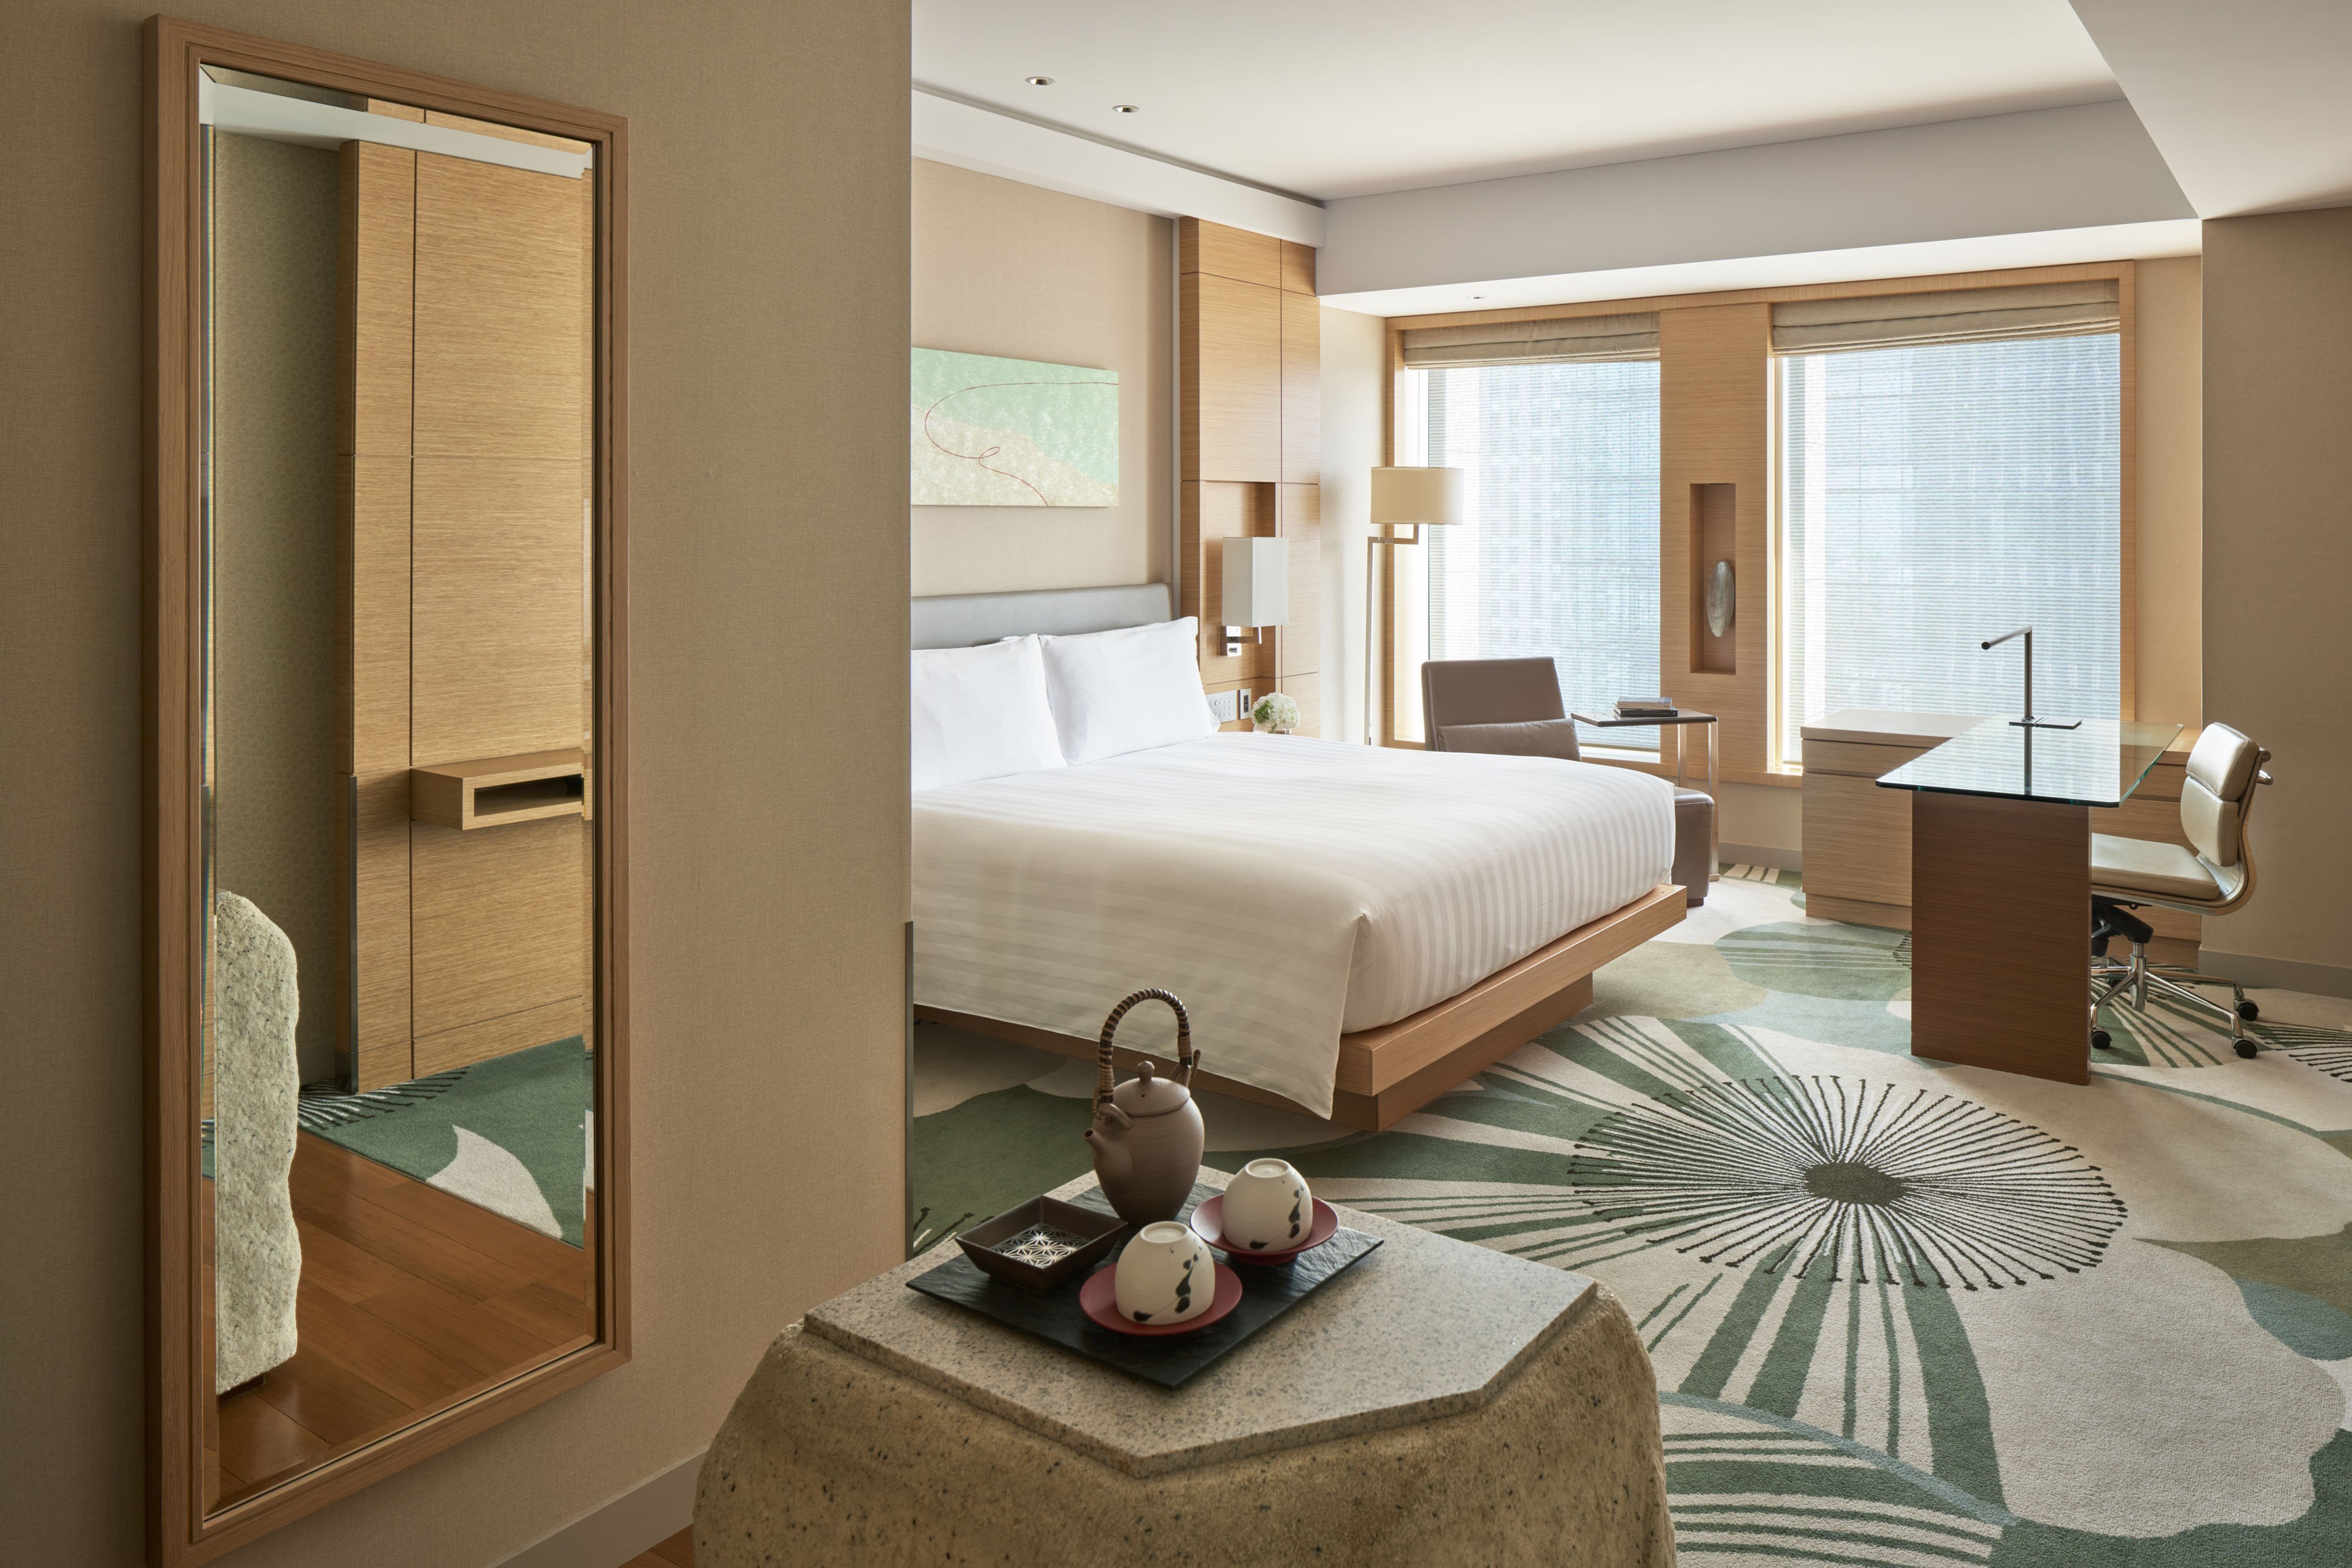 InterContinental Hotel Osaka Rooms: Pictures u0026 Reviews - Tripadvisor